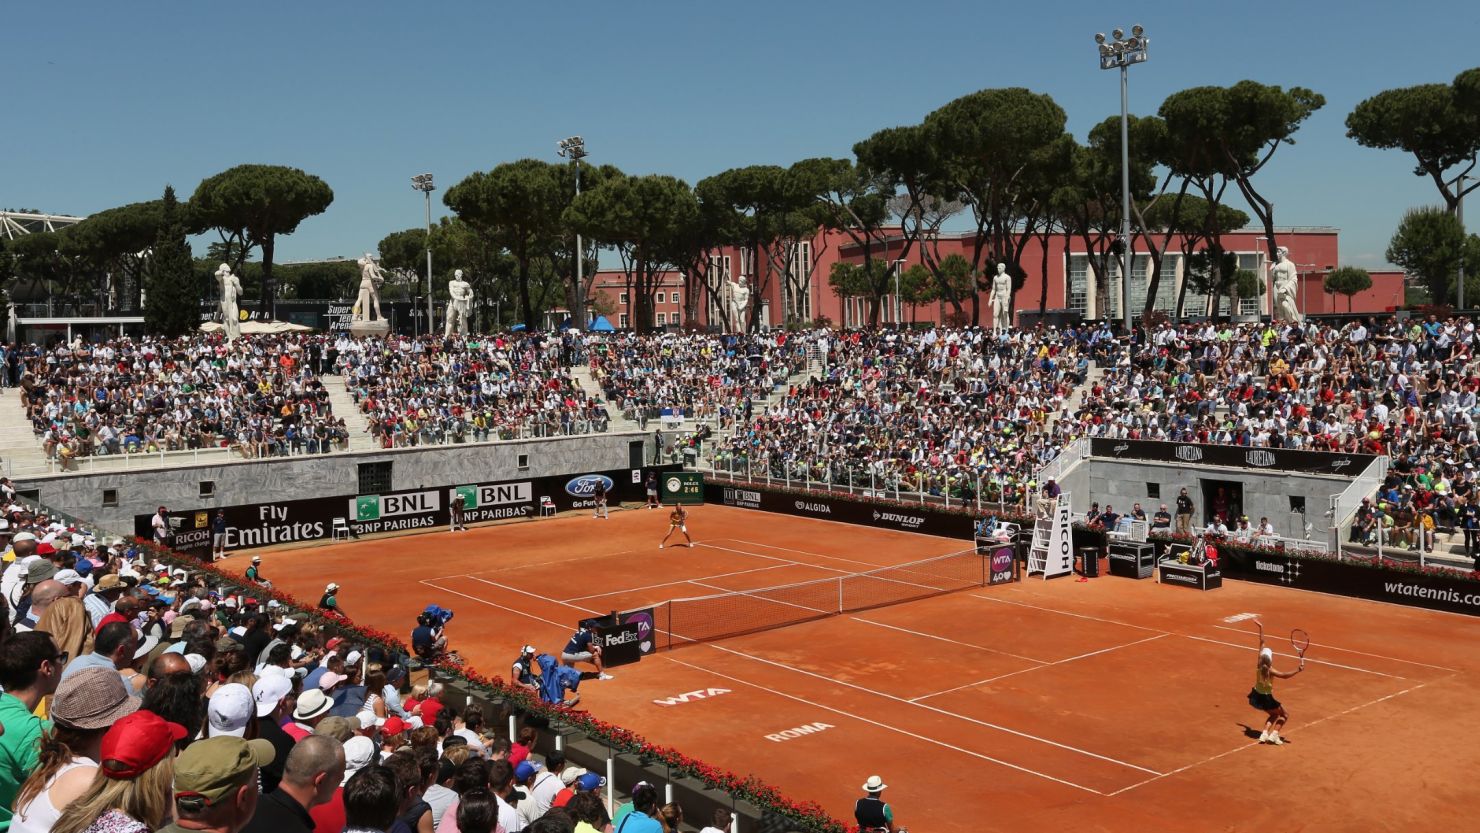 Denmark's Caroline Wozniacki suffered yet another first round exit as she was beaten by Bojana Jovanovski in Rome.